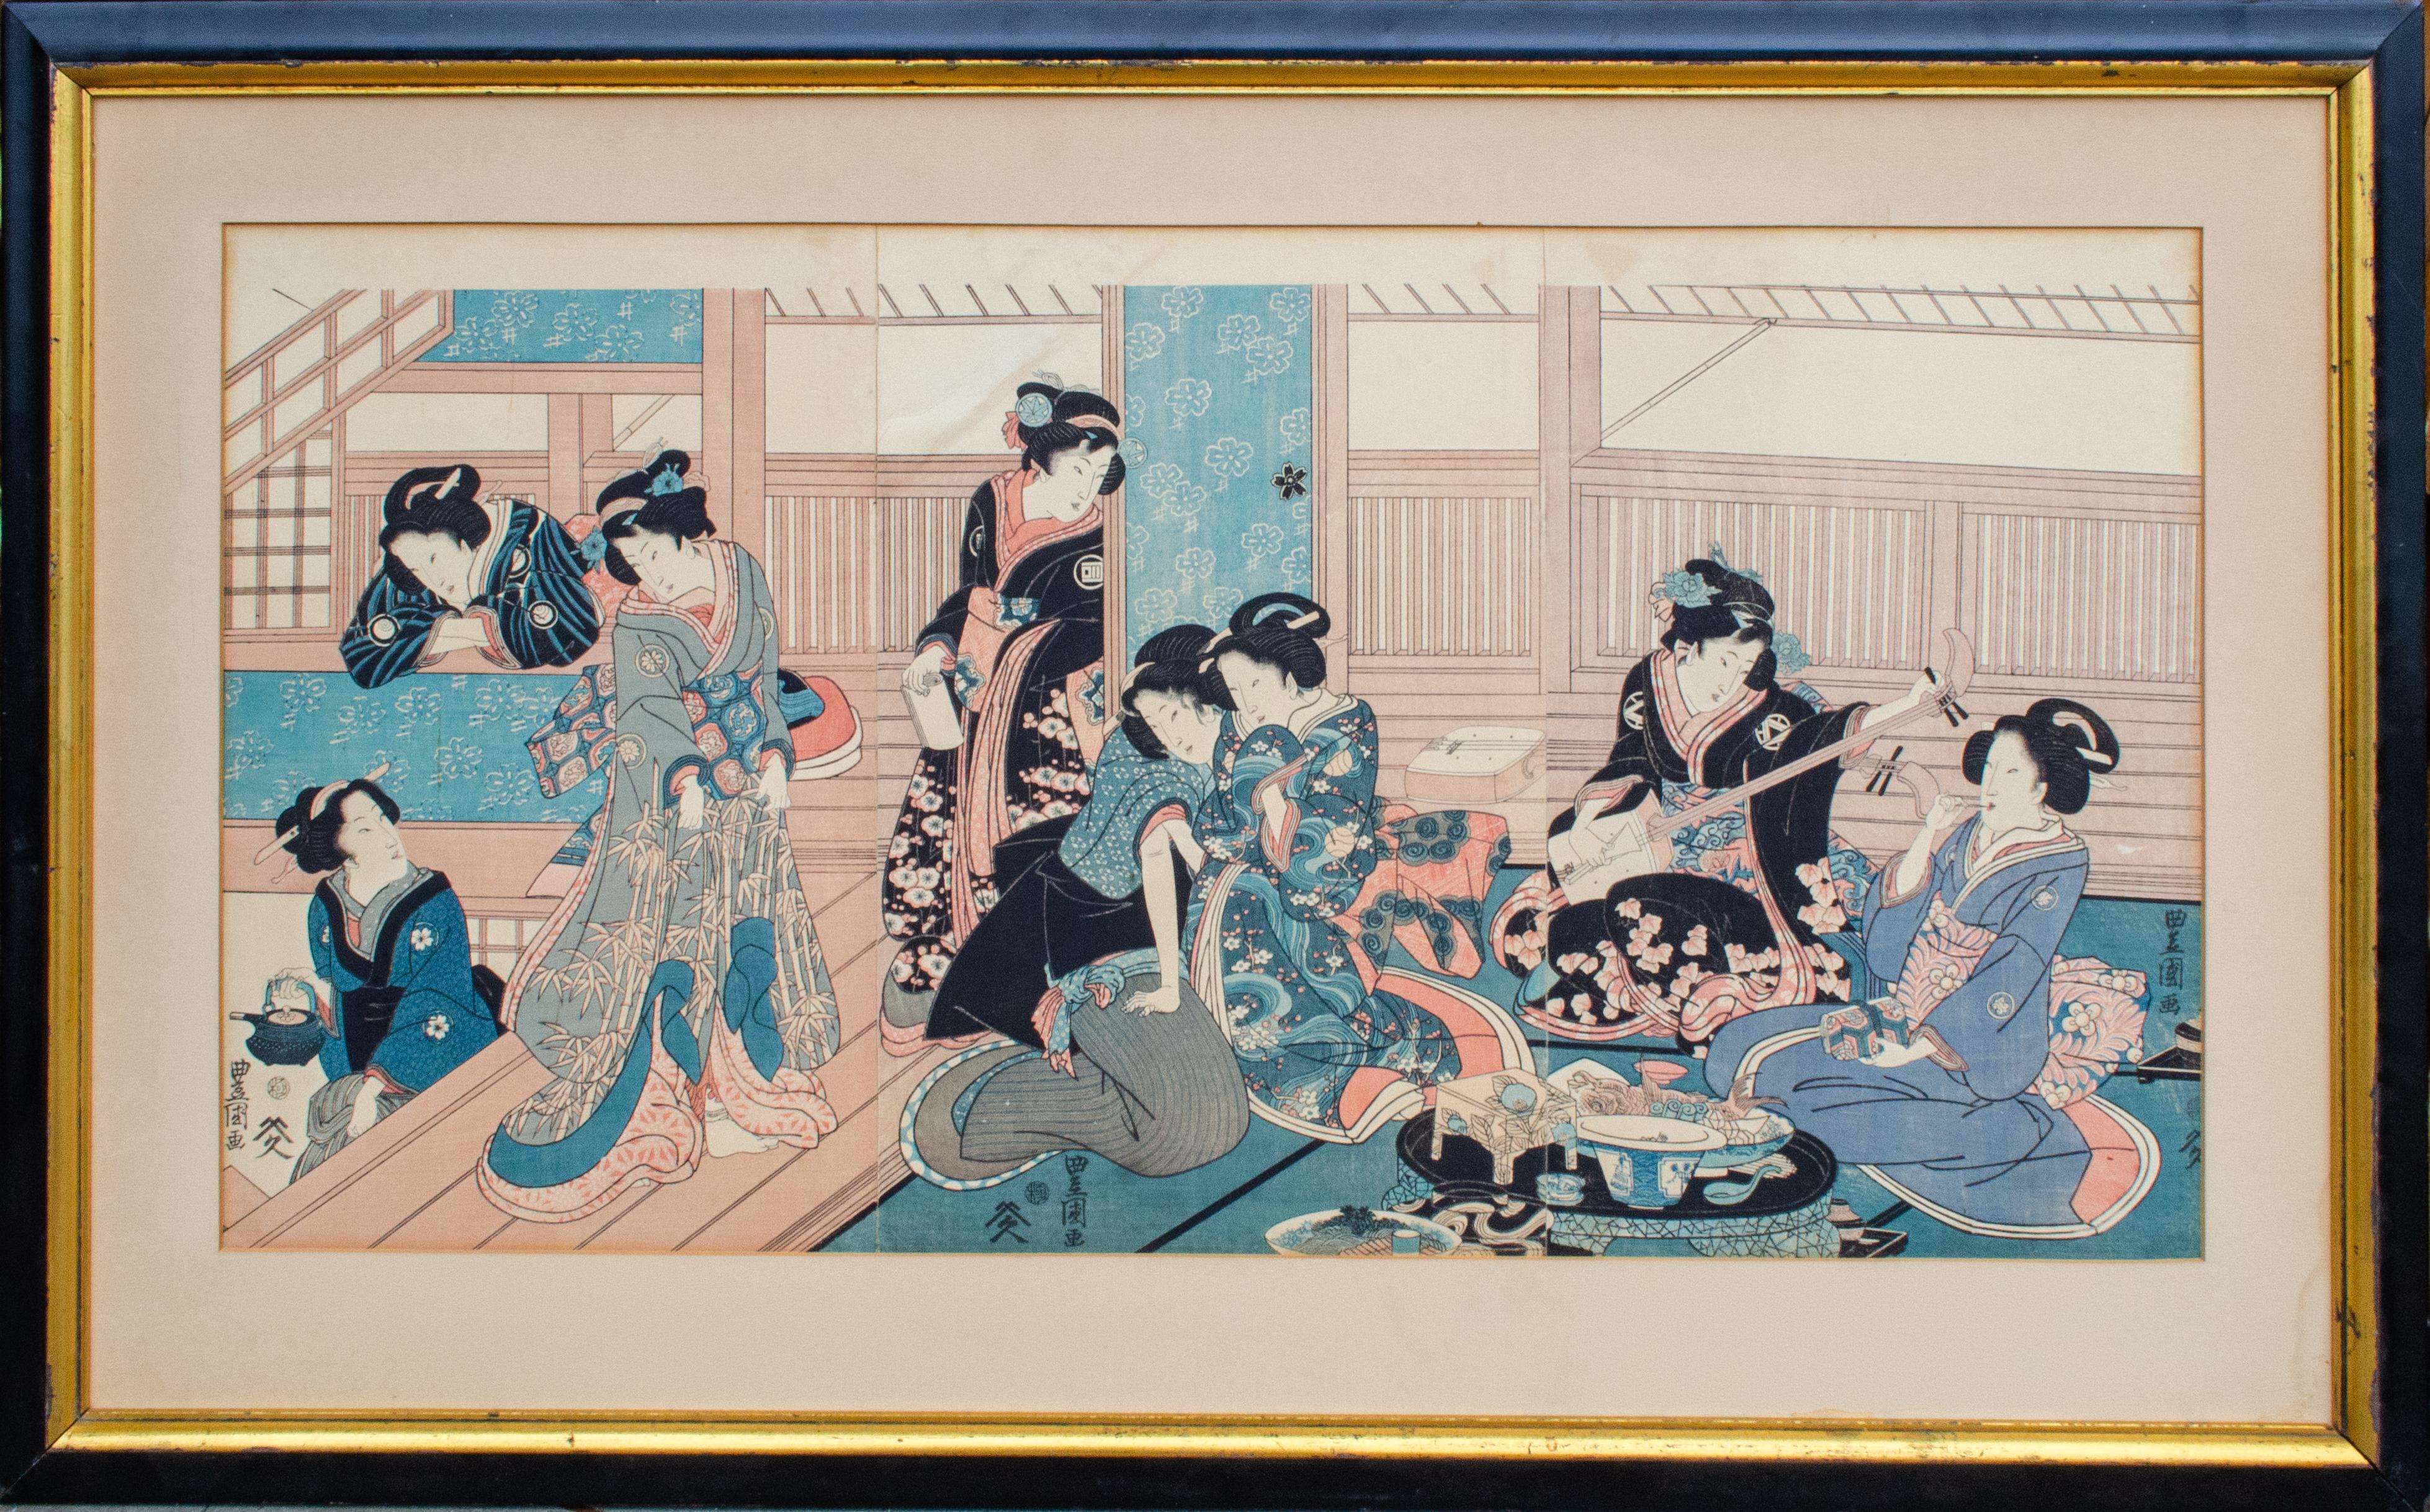 Unknown Interior Print - Ukiyo-e Style Japanese Woodcut of Courtesans in Their Quarters